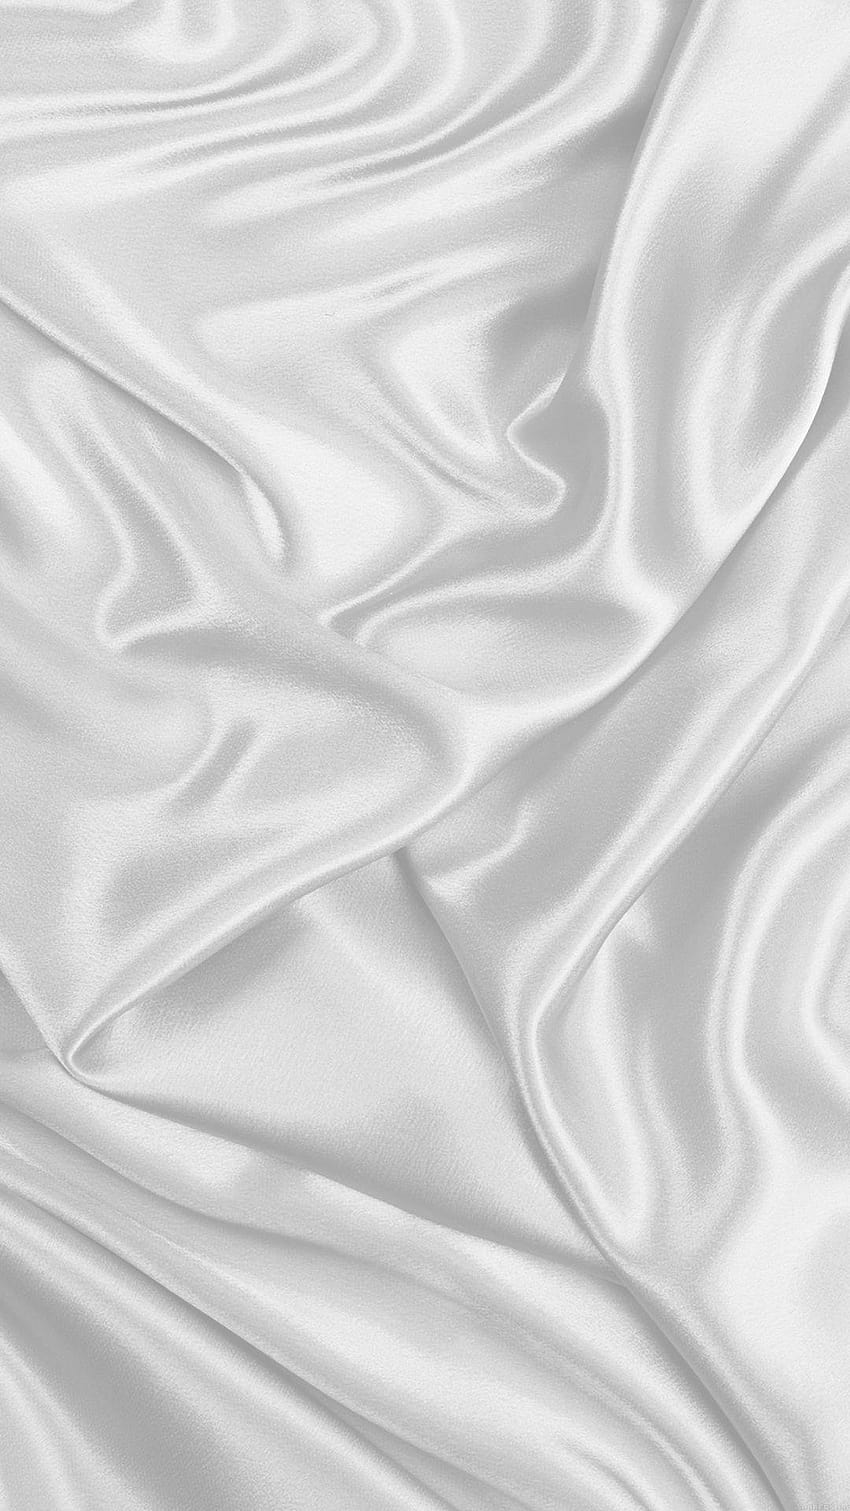 White Soft Silk Fabric iPhone / iPod HD phone wallpaper